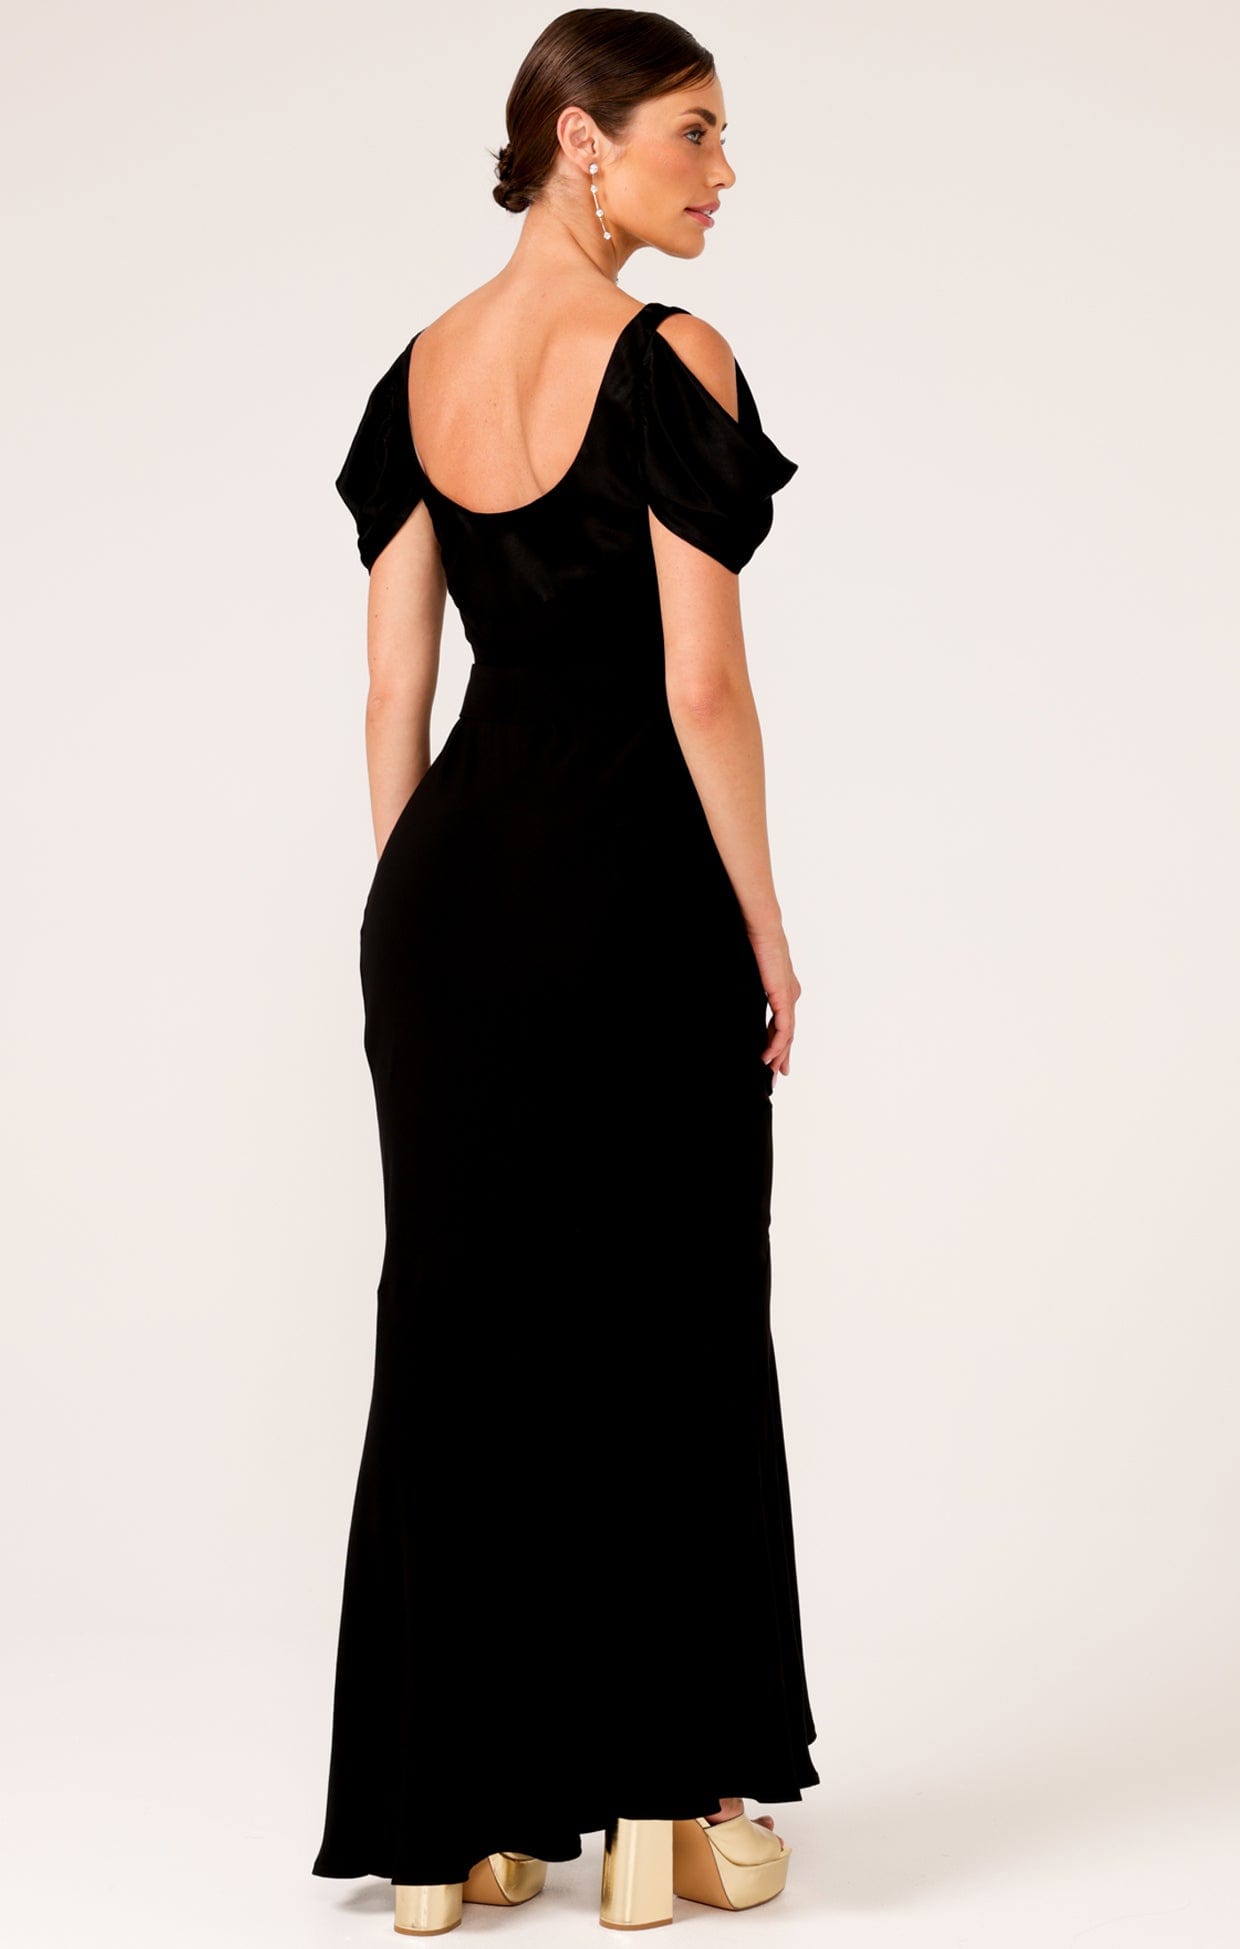 Dresses Events WINDSOR MAXI DRESS IN BLACK